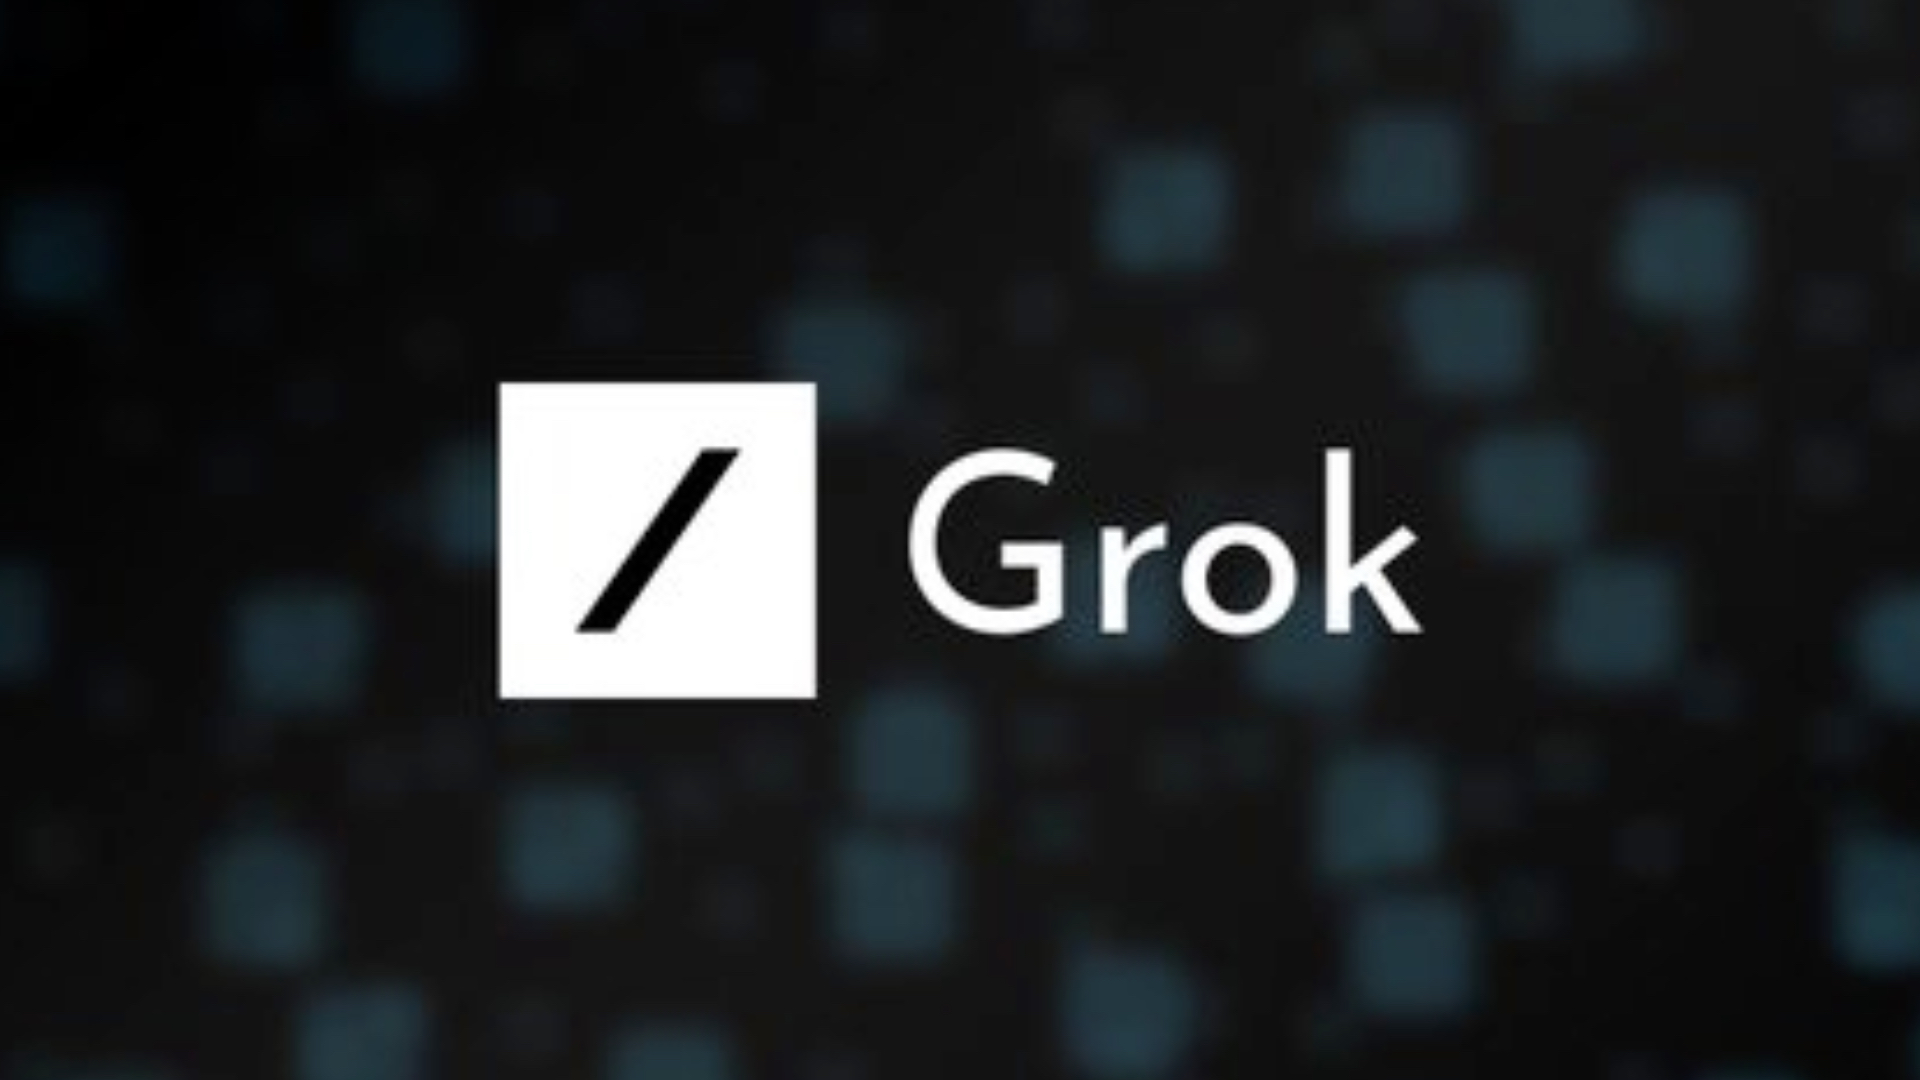 Elon Musk launches new GenAI chatbot xAI Grok to rival ChatGPT